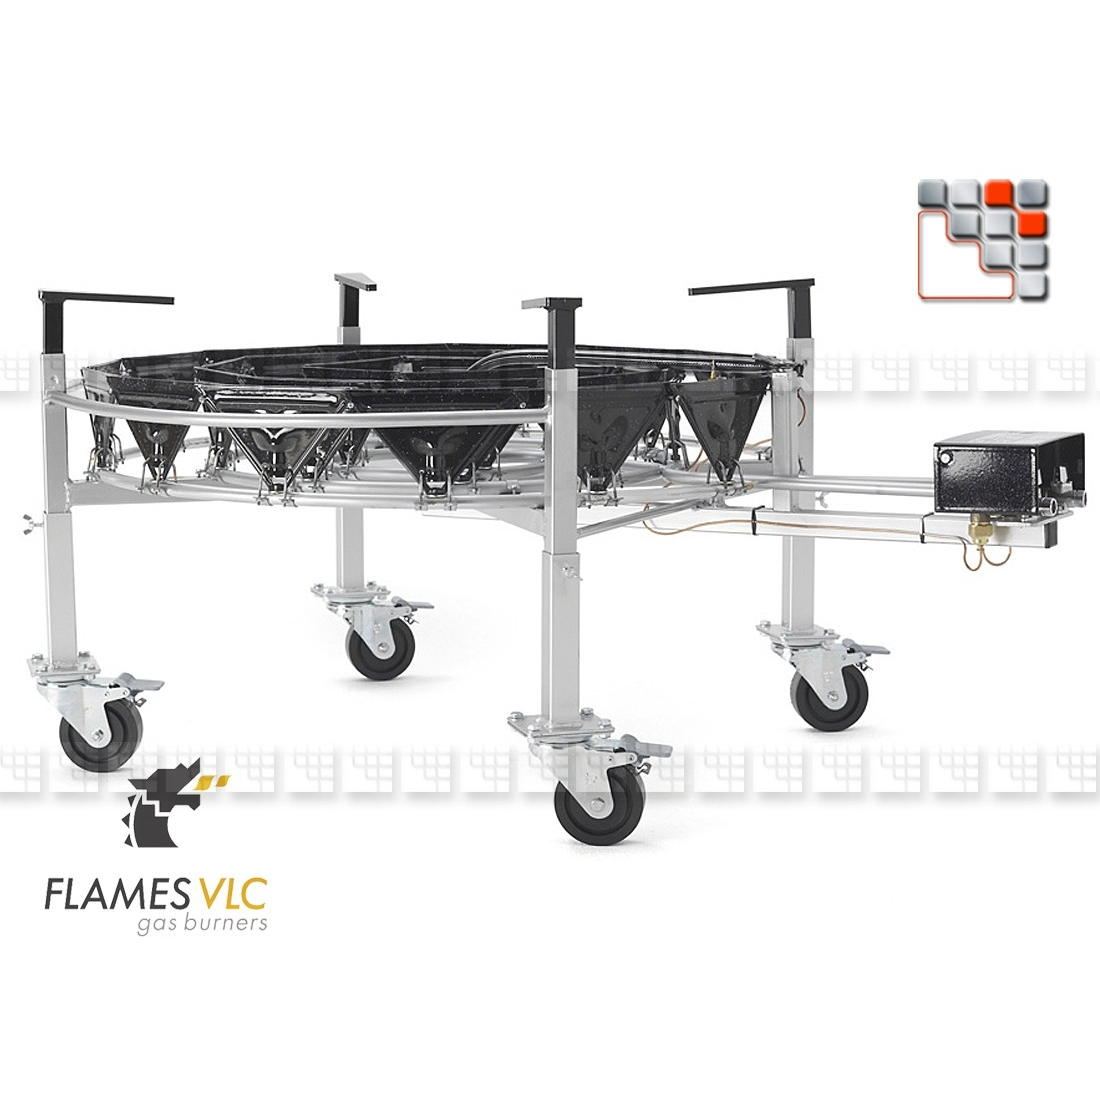 Kit 4 Adjustable Legs Adjustable Wheels VLC F08-BDKTRO900 FL AMES VLC® Gas Burner Flames VLC